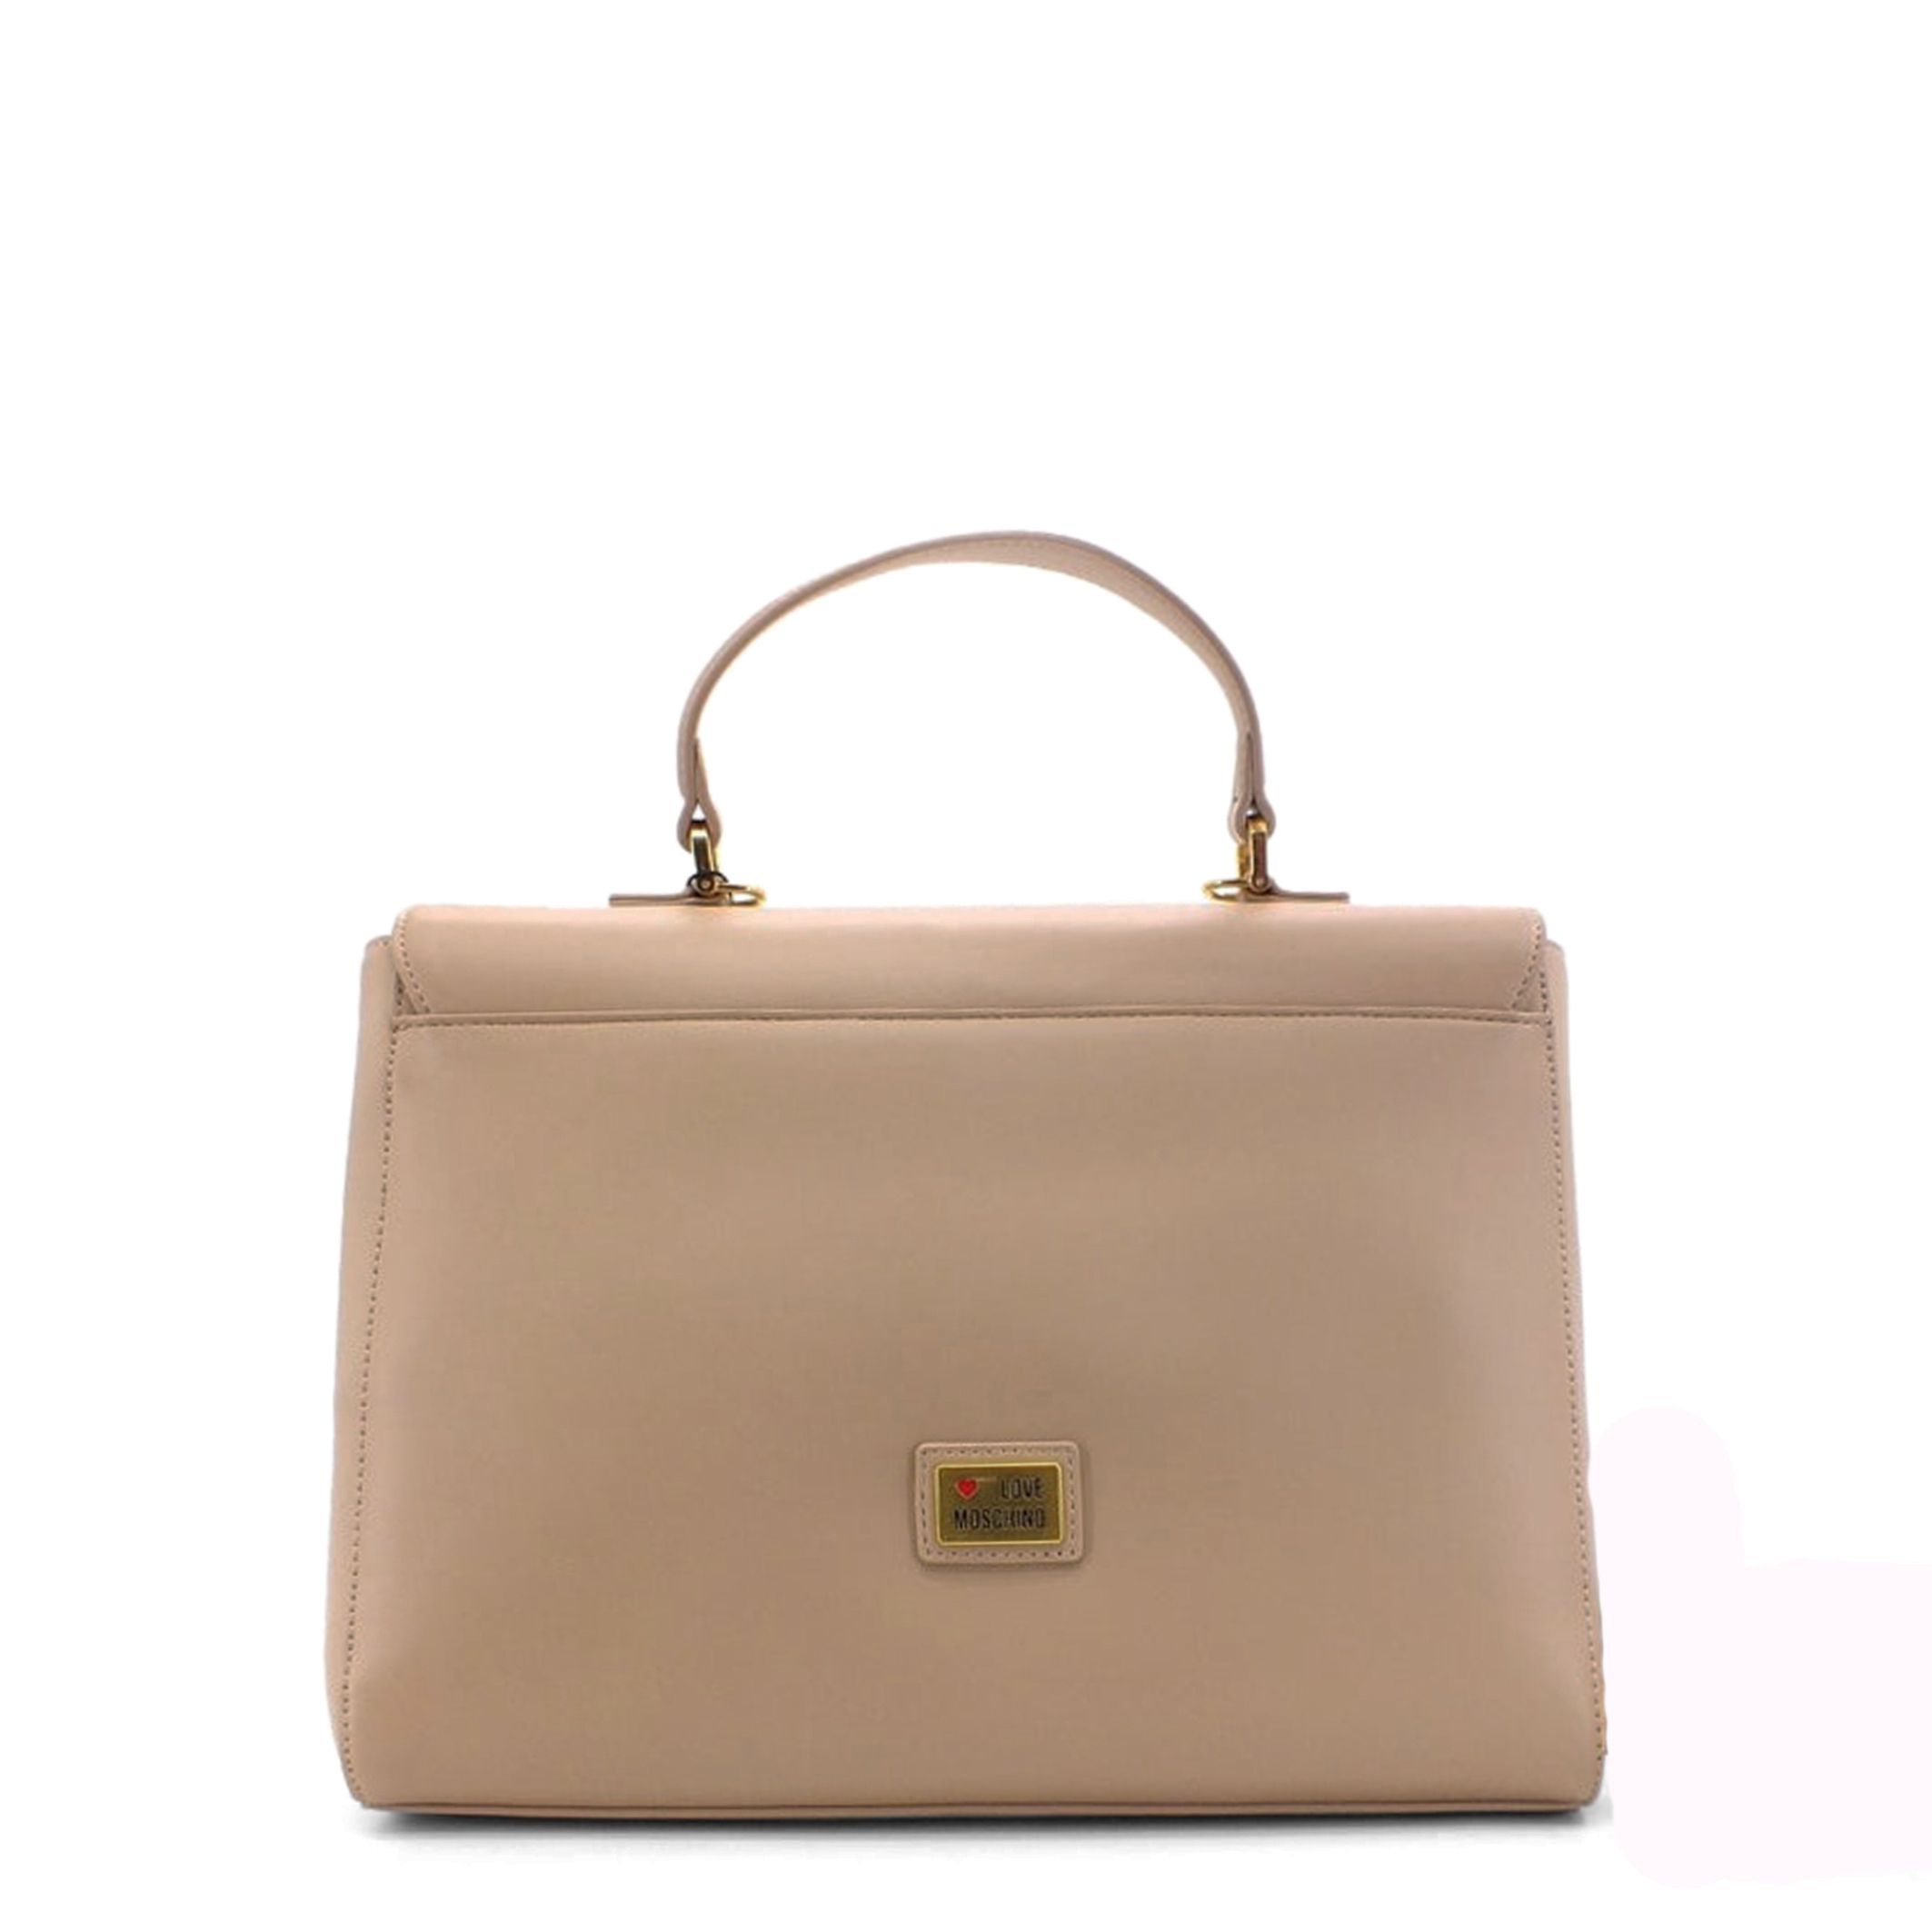 Love Moschino Brown Handbags for Women - JC4076PP1ELC0